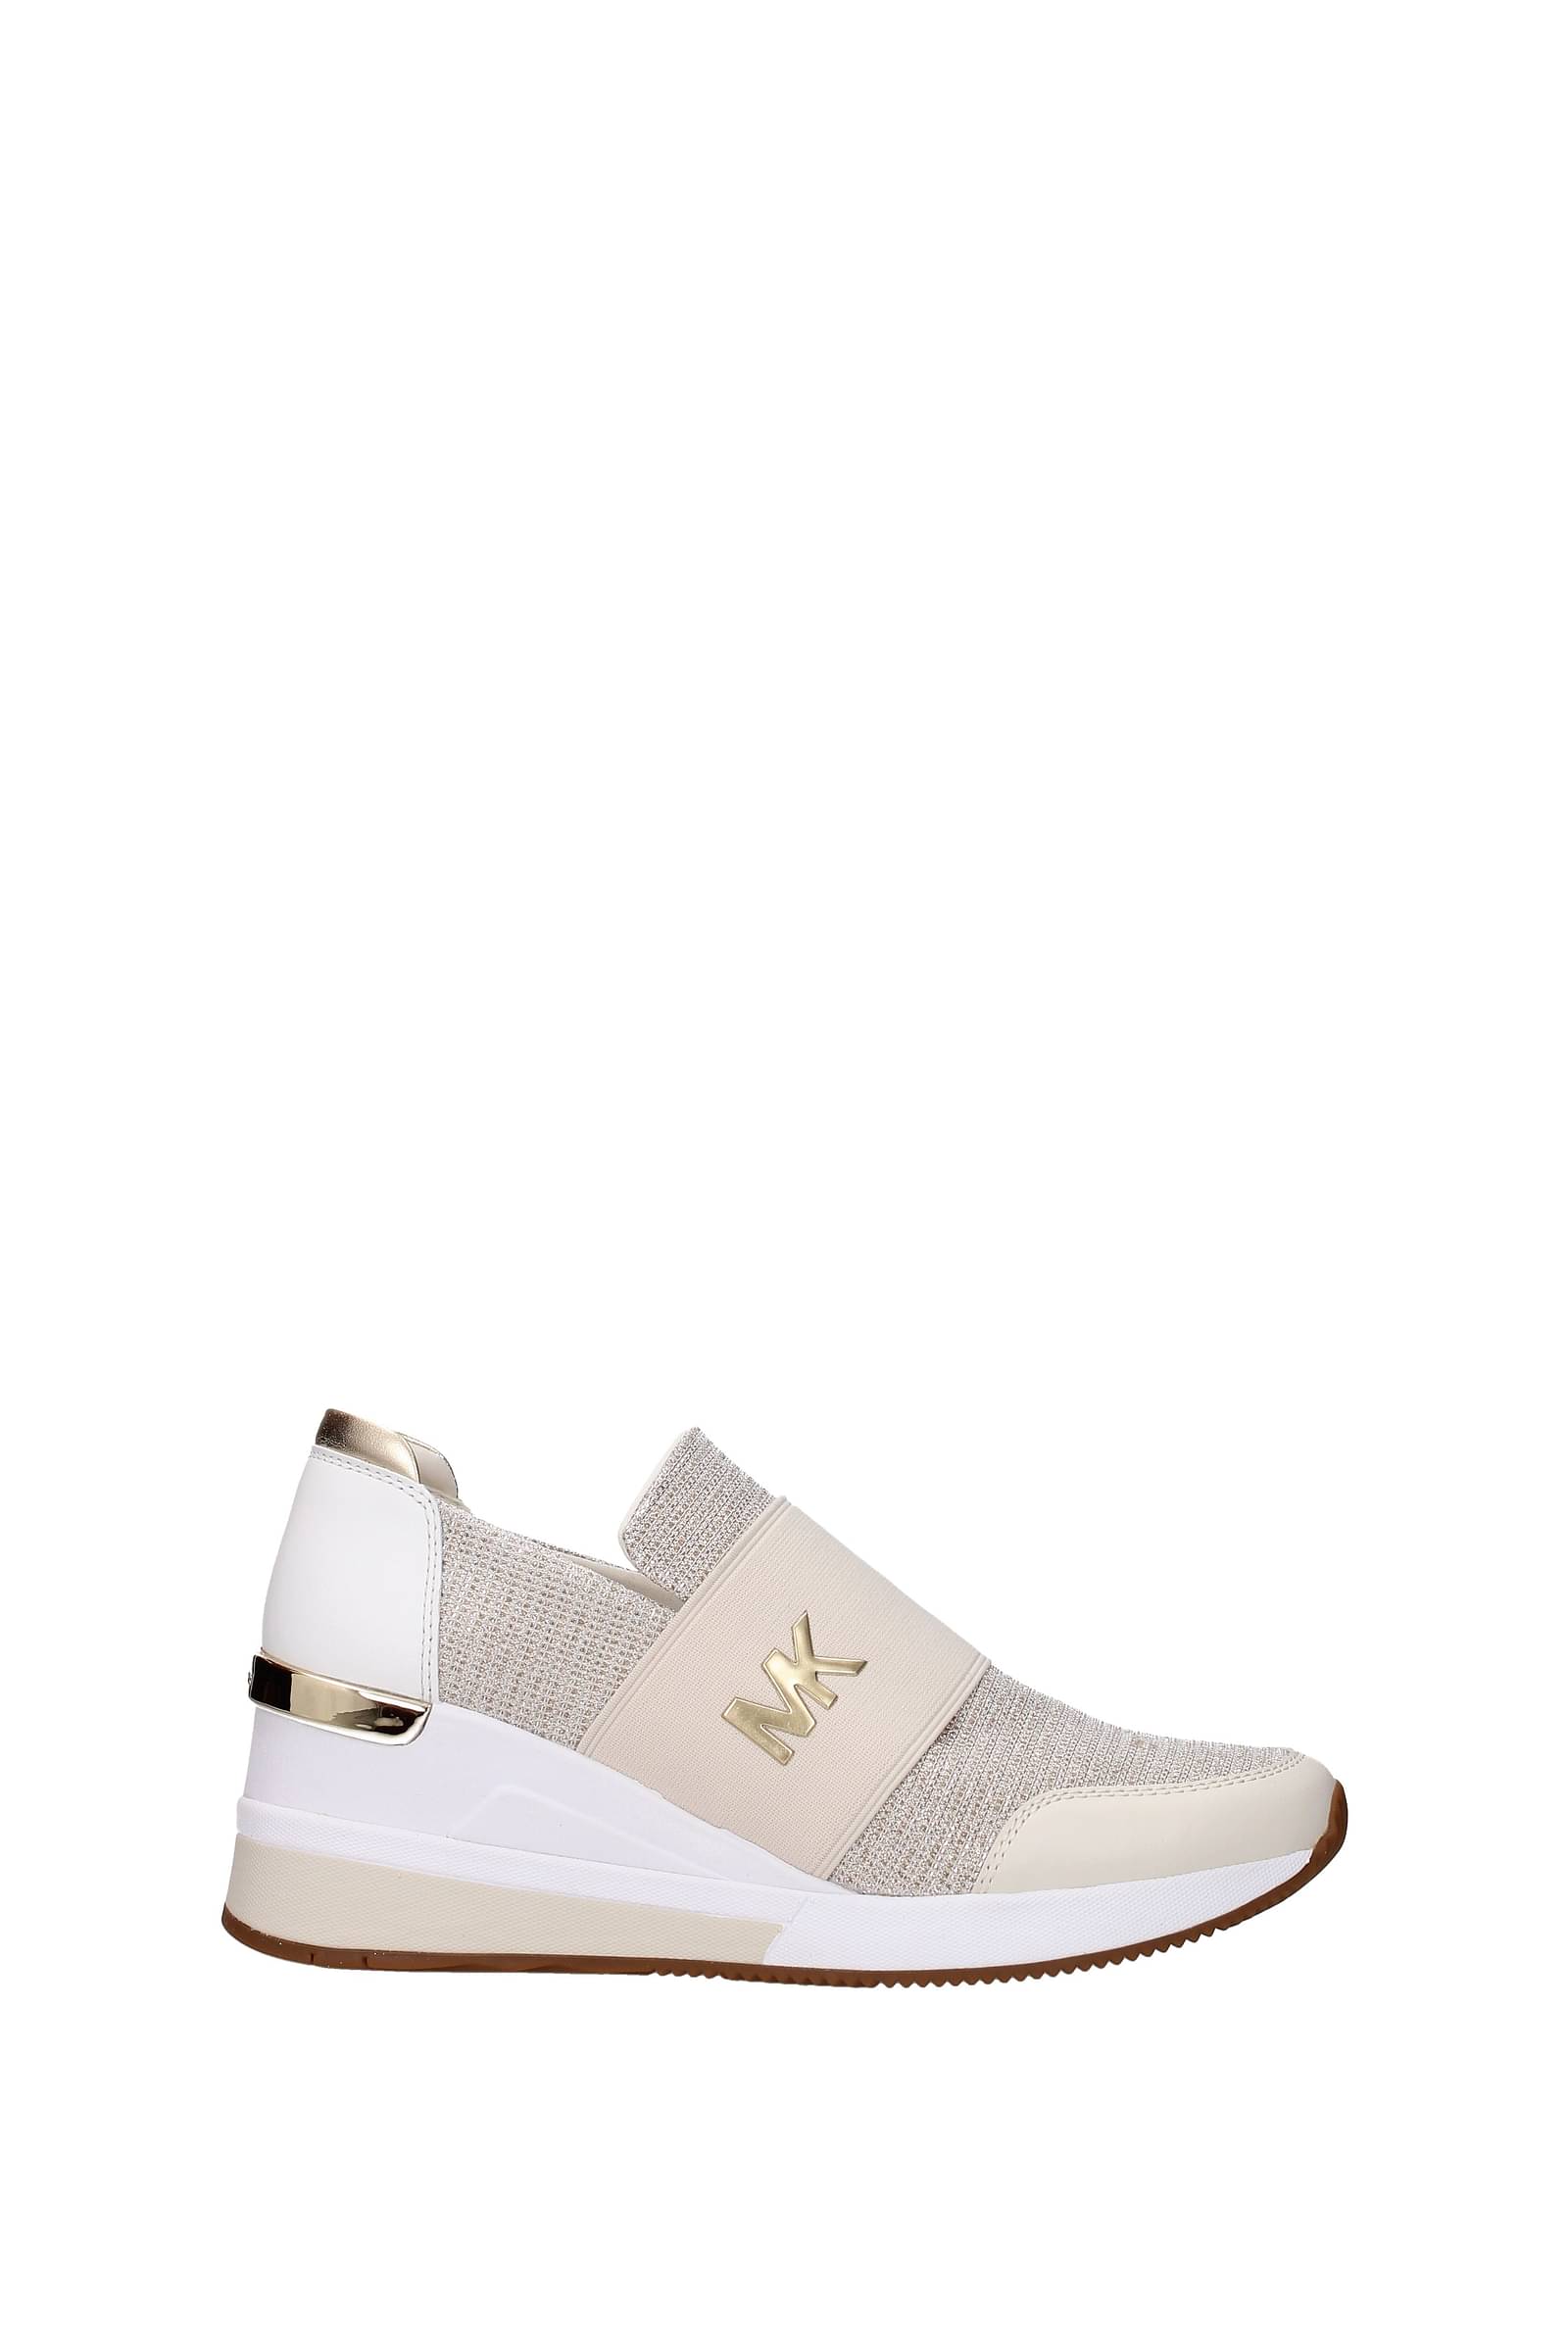 Michael Kors Womens Sneakers  Tennis Shoes  Macys